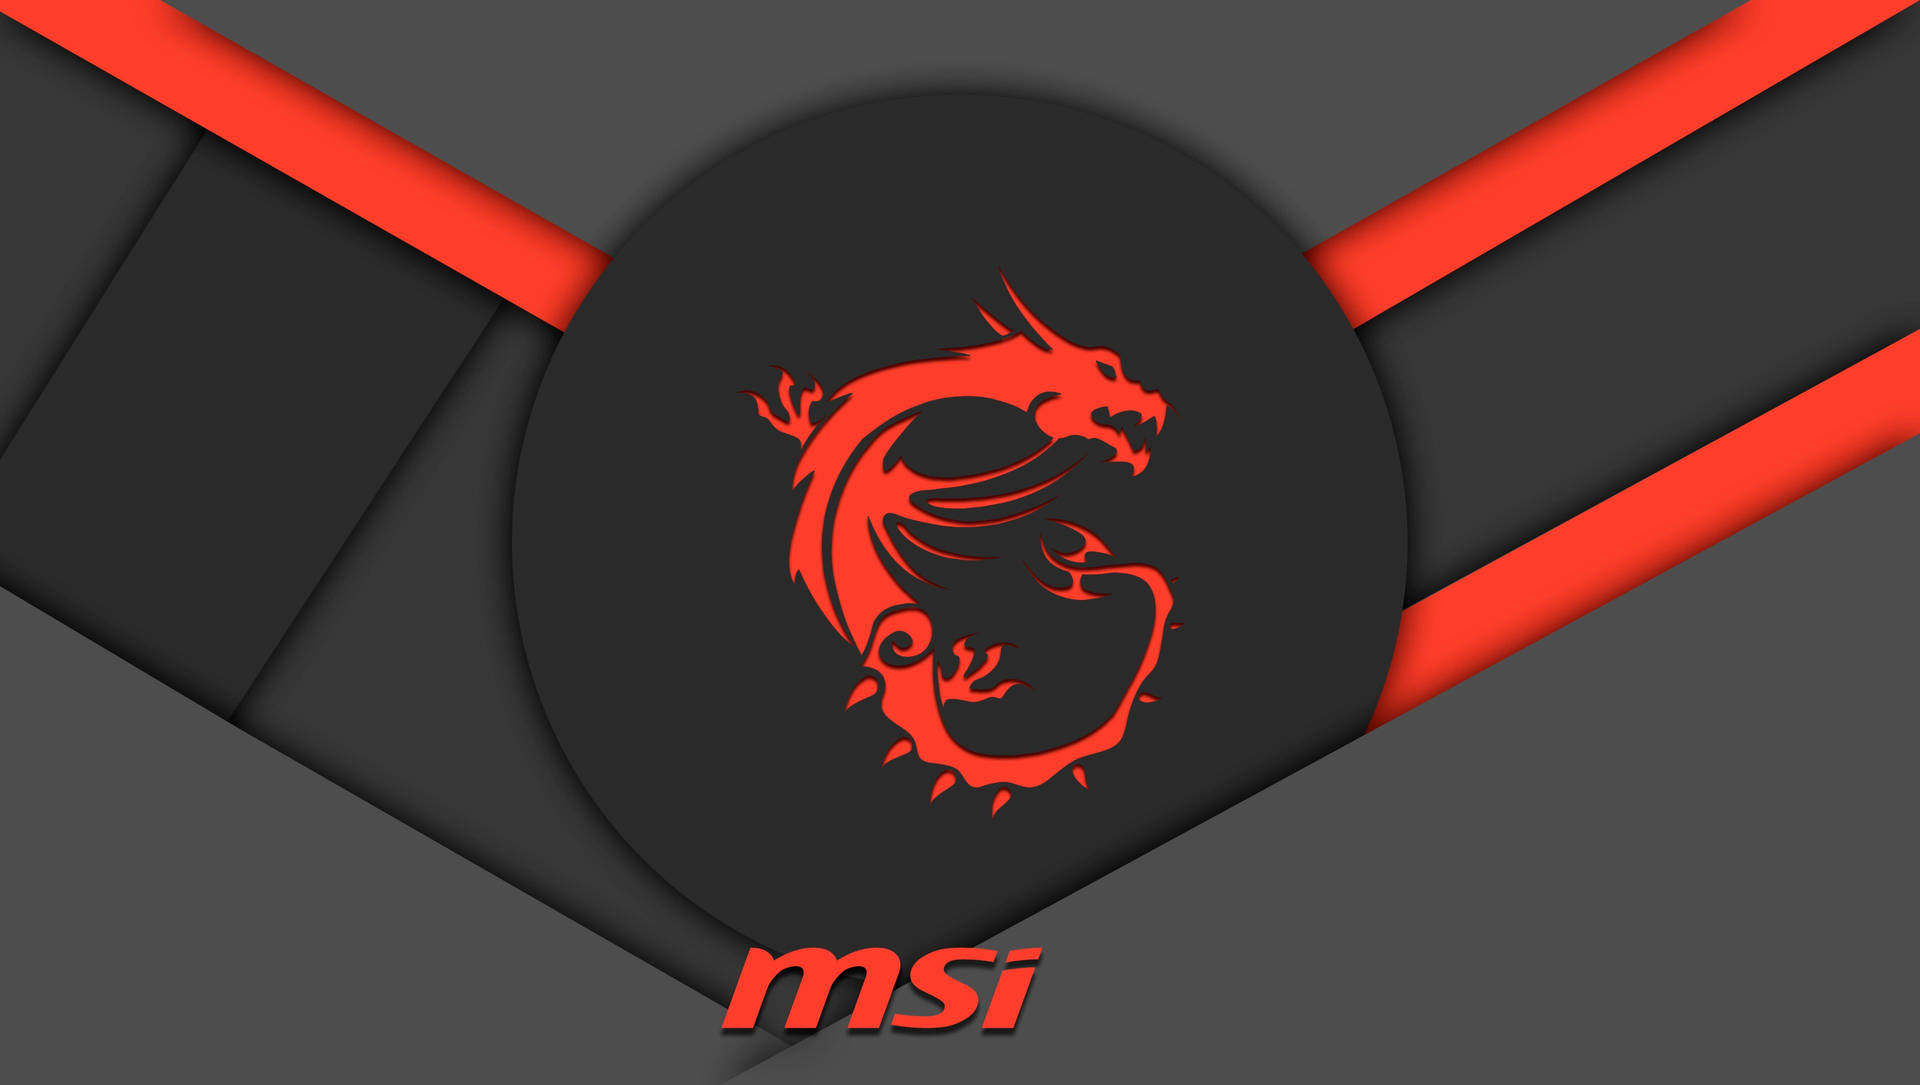 Msi 4k Red Dragon Banner Wallpaper